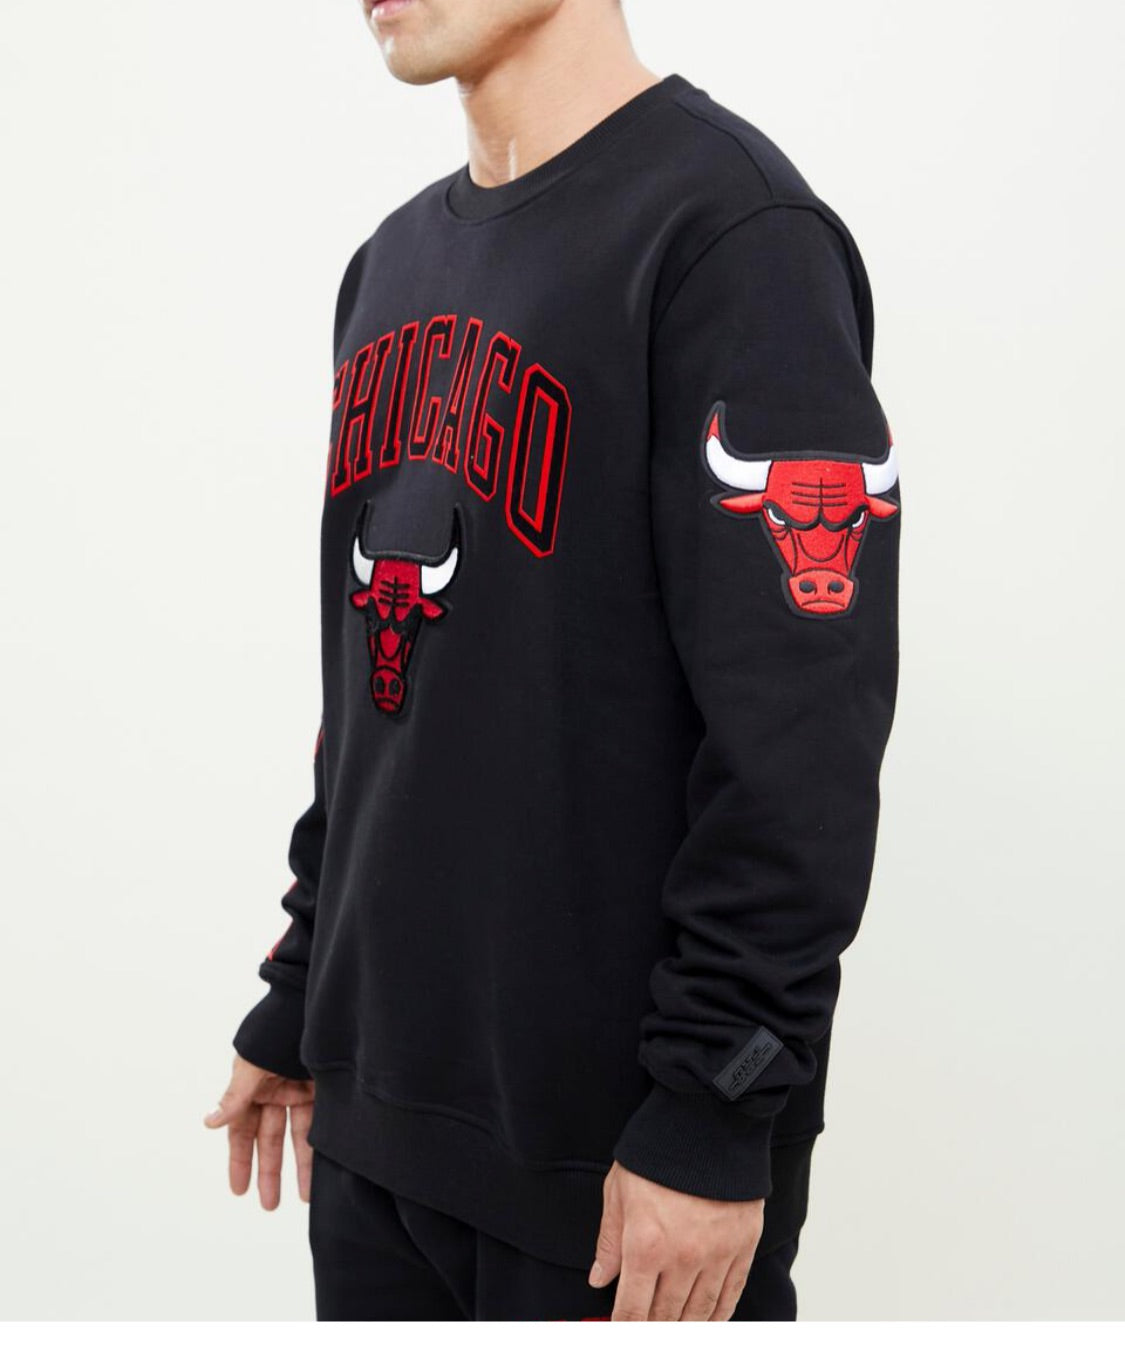 Pro Standard Chicago Bulls Crew Sweatshirt